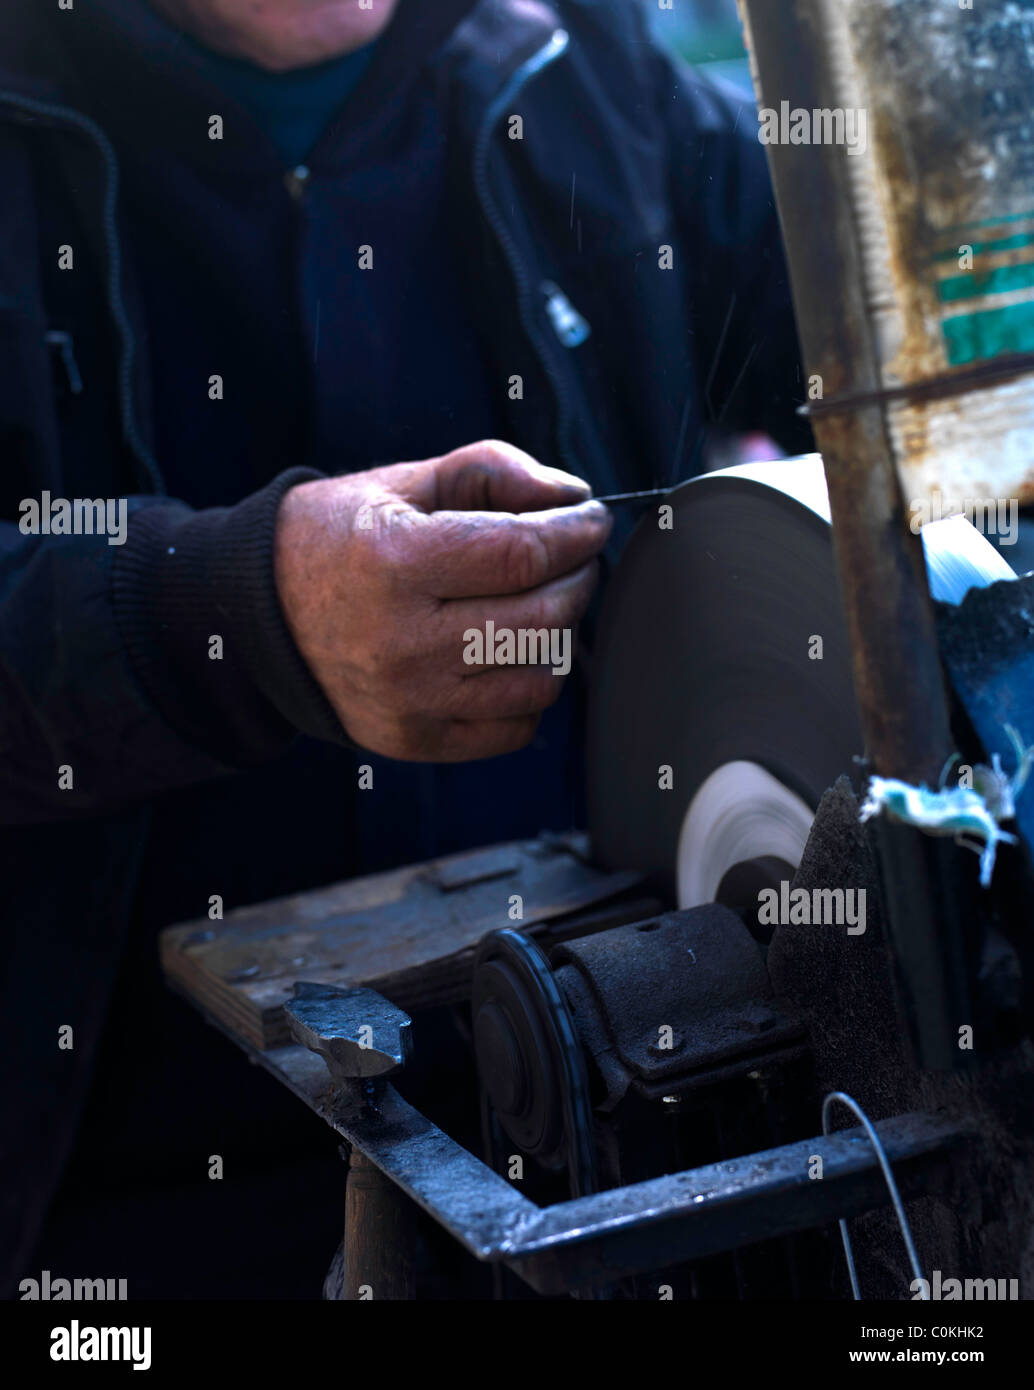 knife sharpening machine and master. Grinding machine. grinding knife using  abrasive stone Stock Photo - Alamy